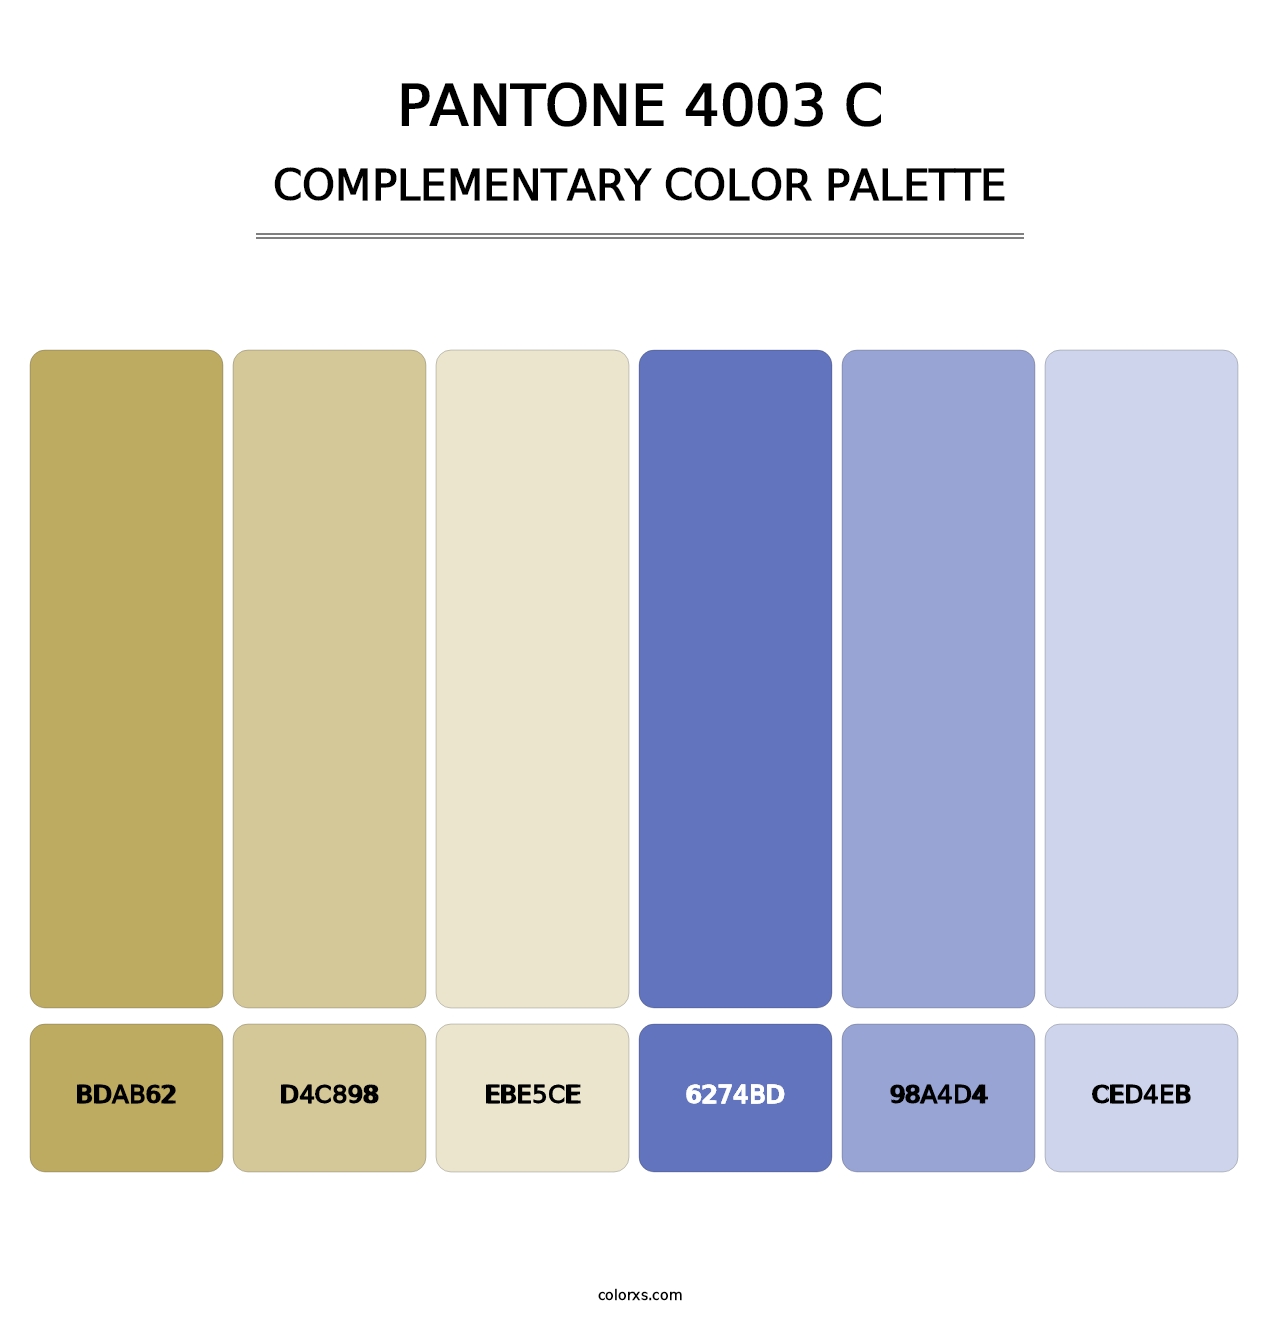 PANTONE 4003 C - Complementary Color Palette